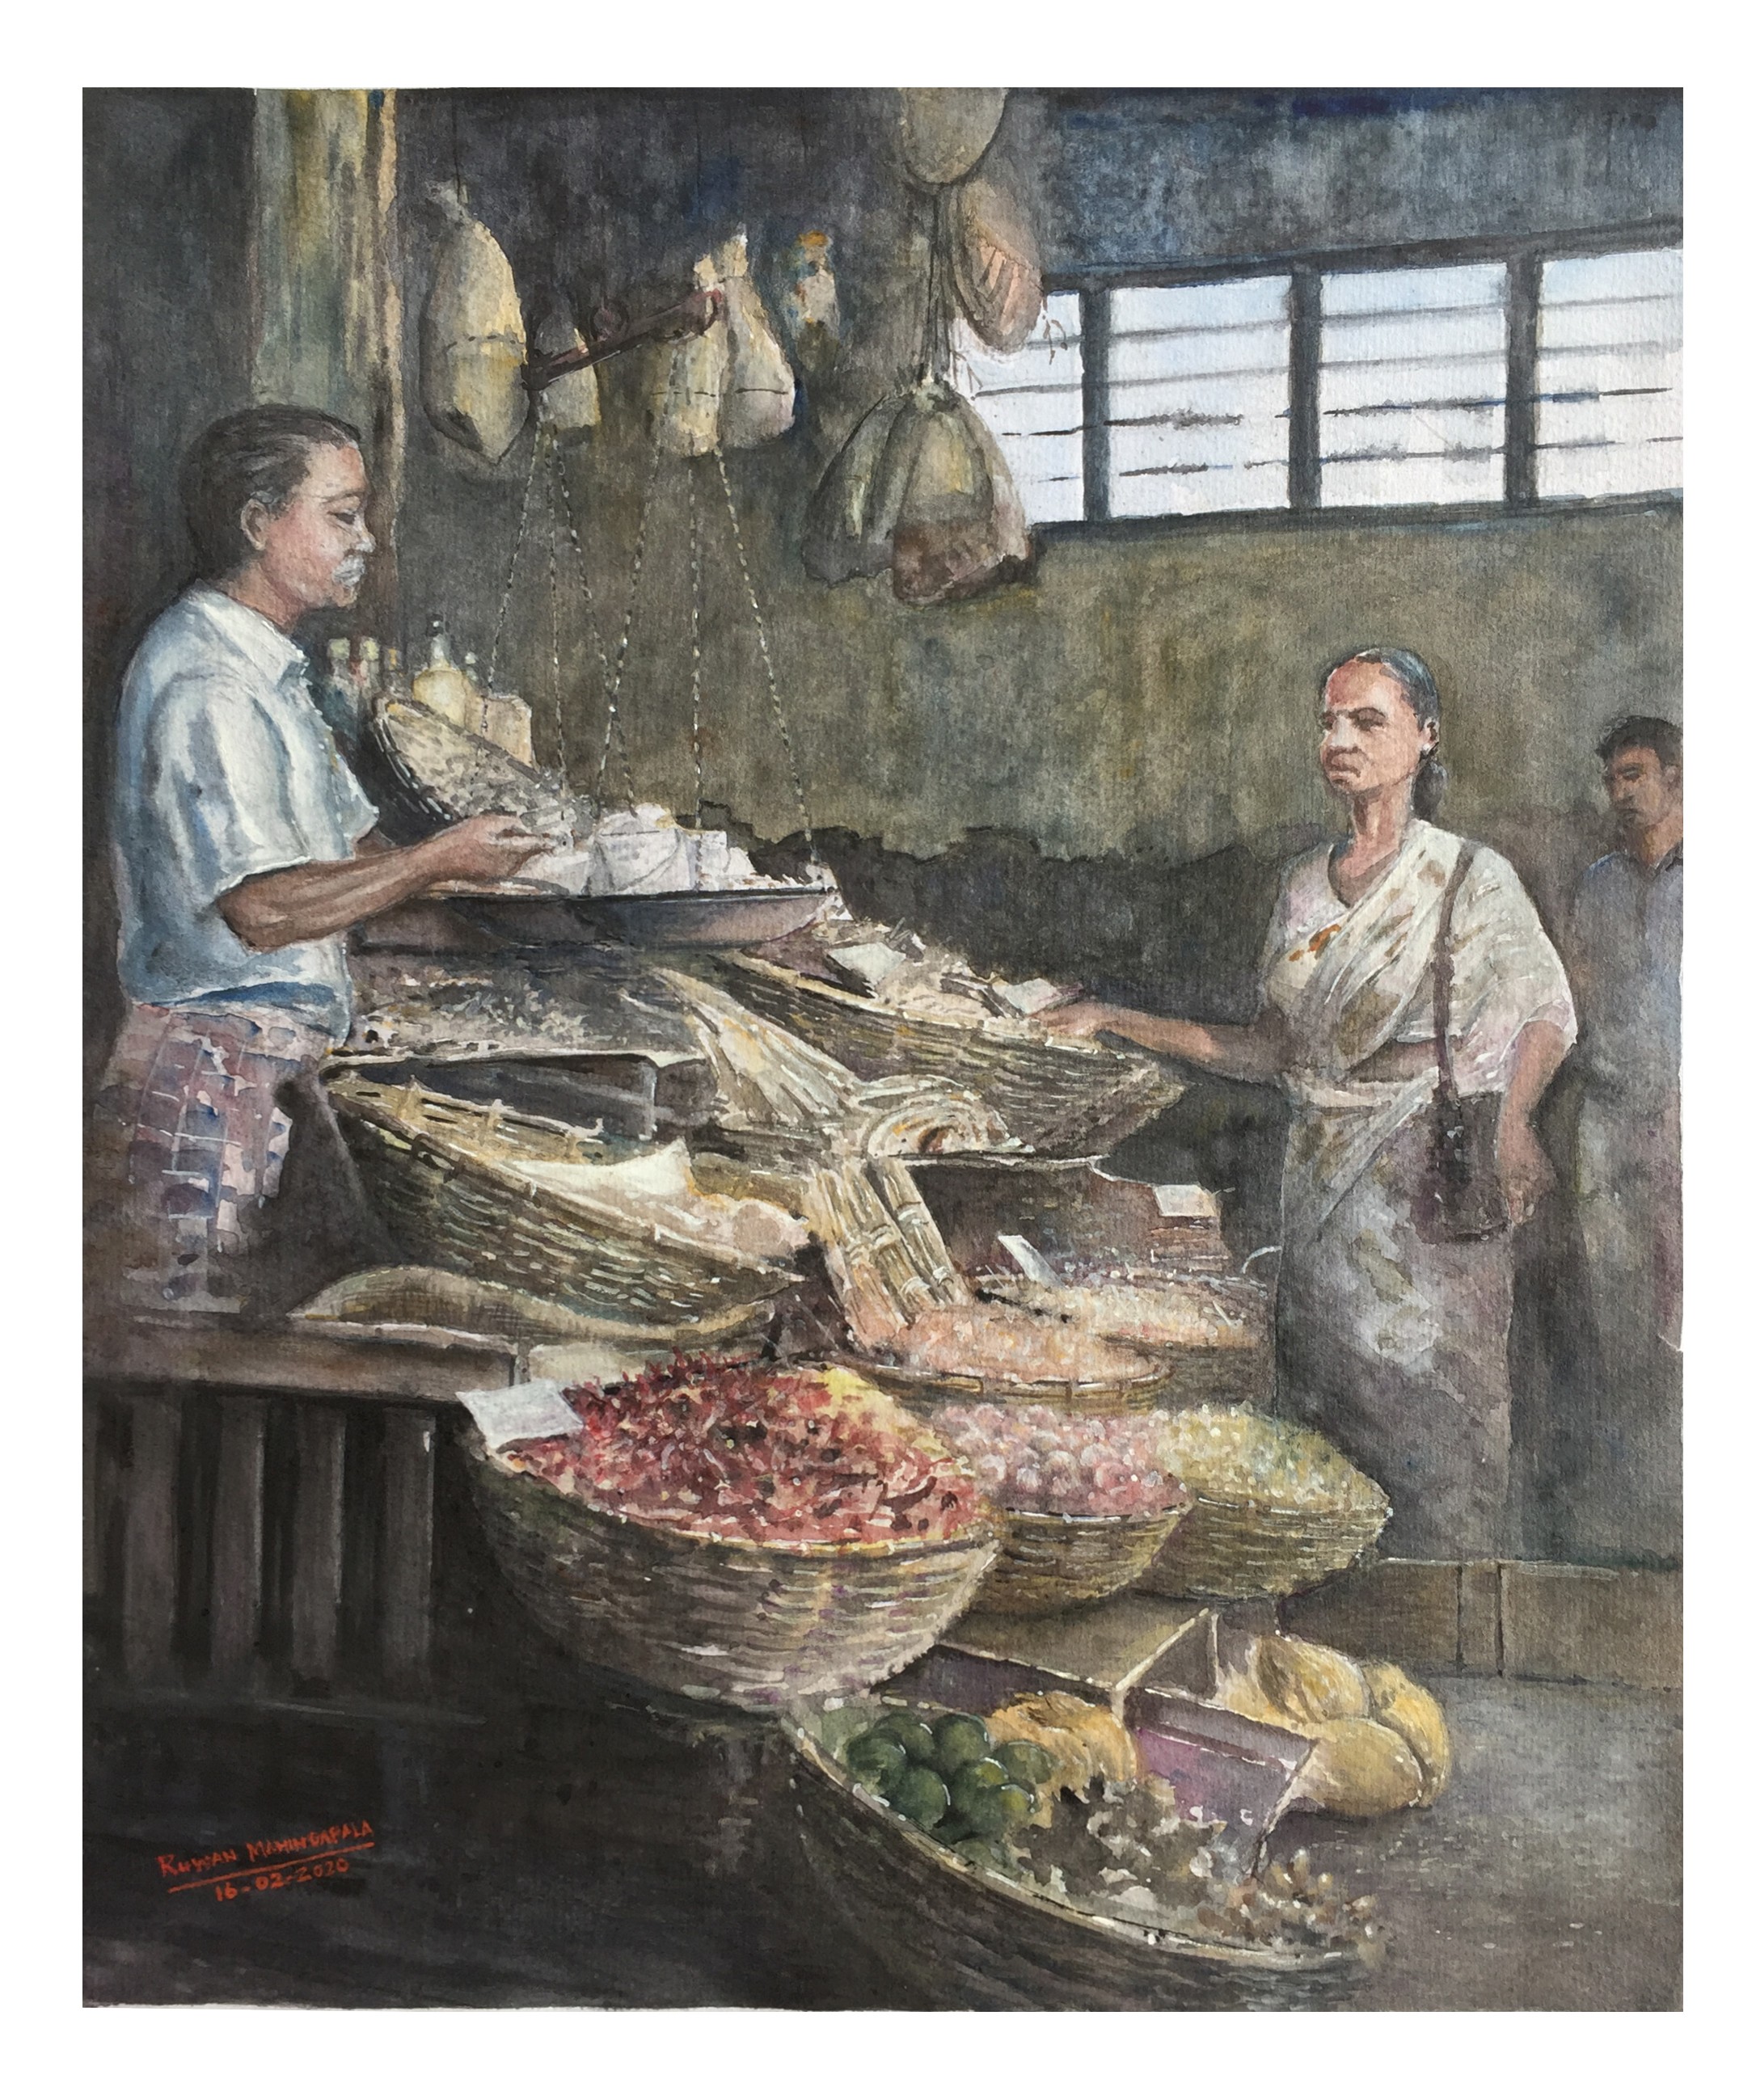 seller in market by RUWAN MAHINDAPALA